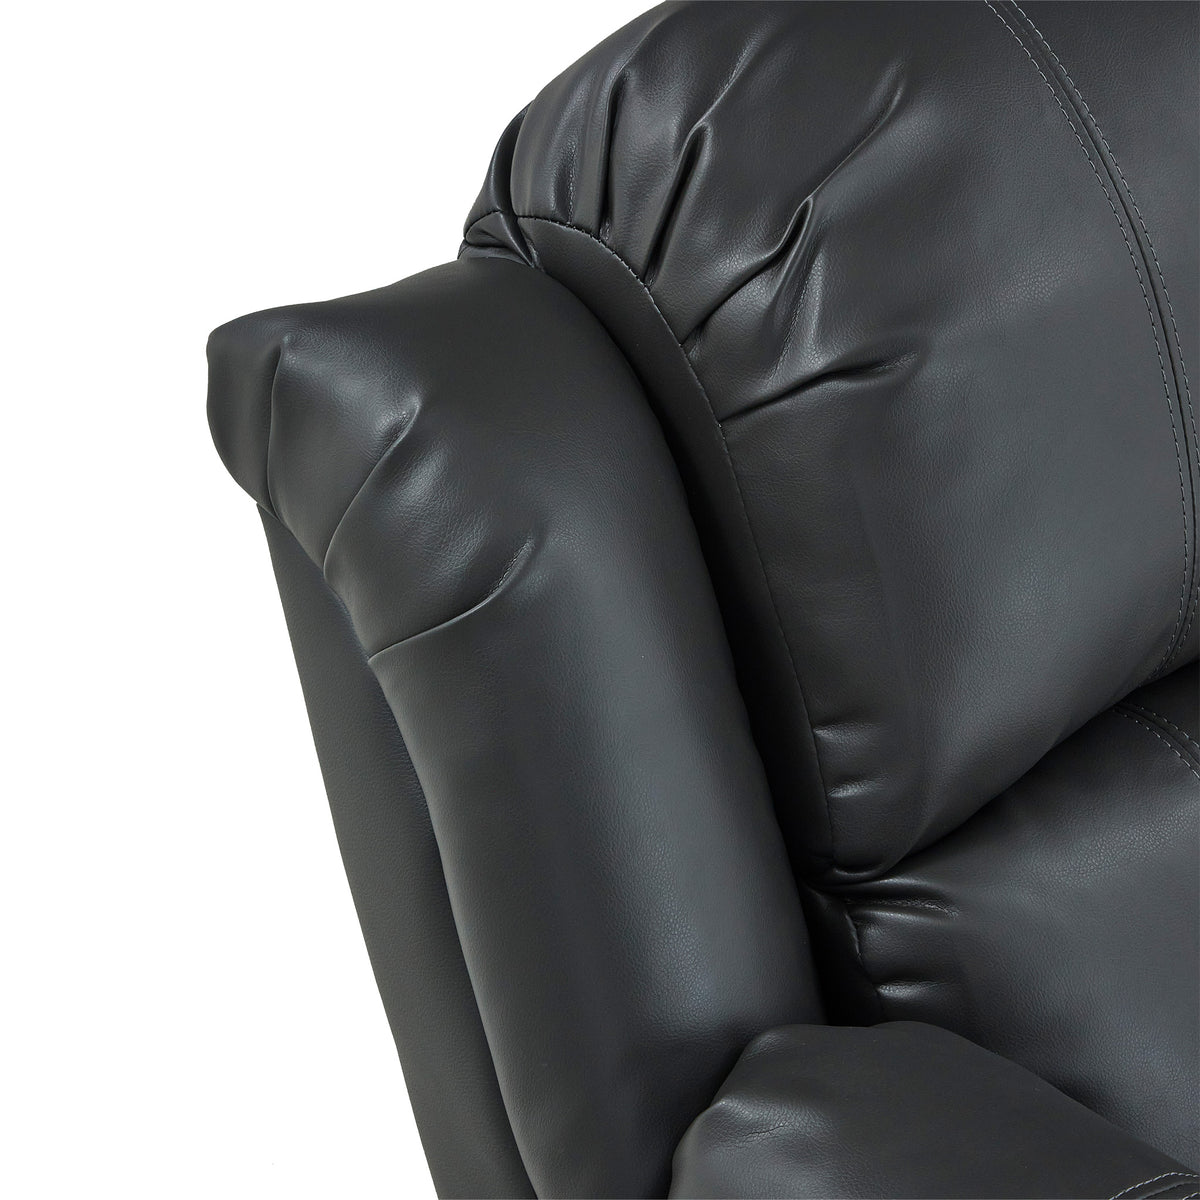 Anton Grey Leather Reclining 3 Seater Sofa